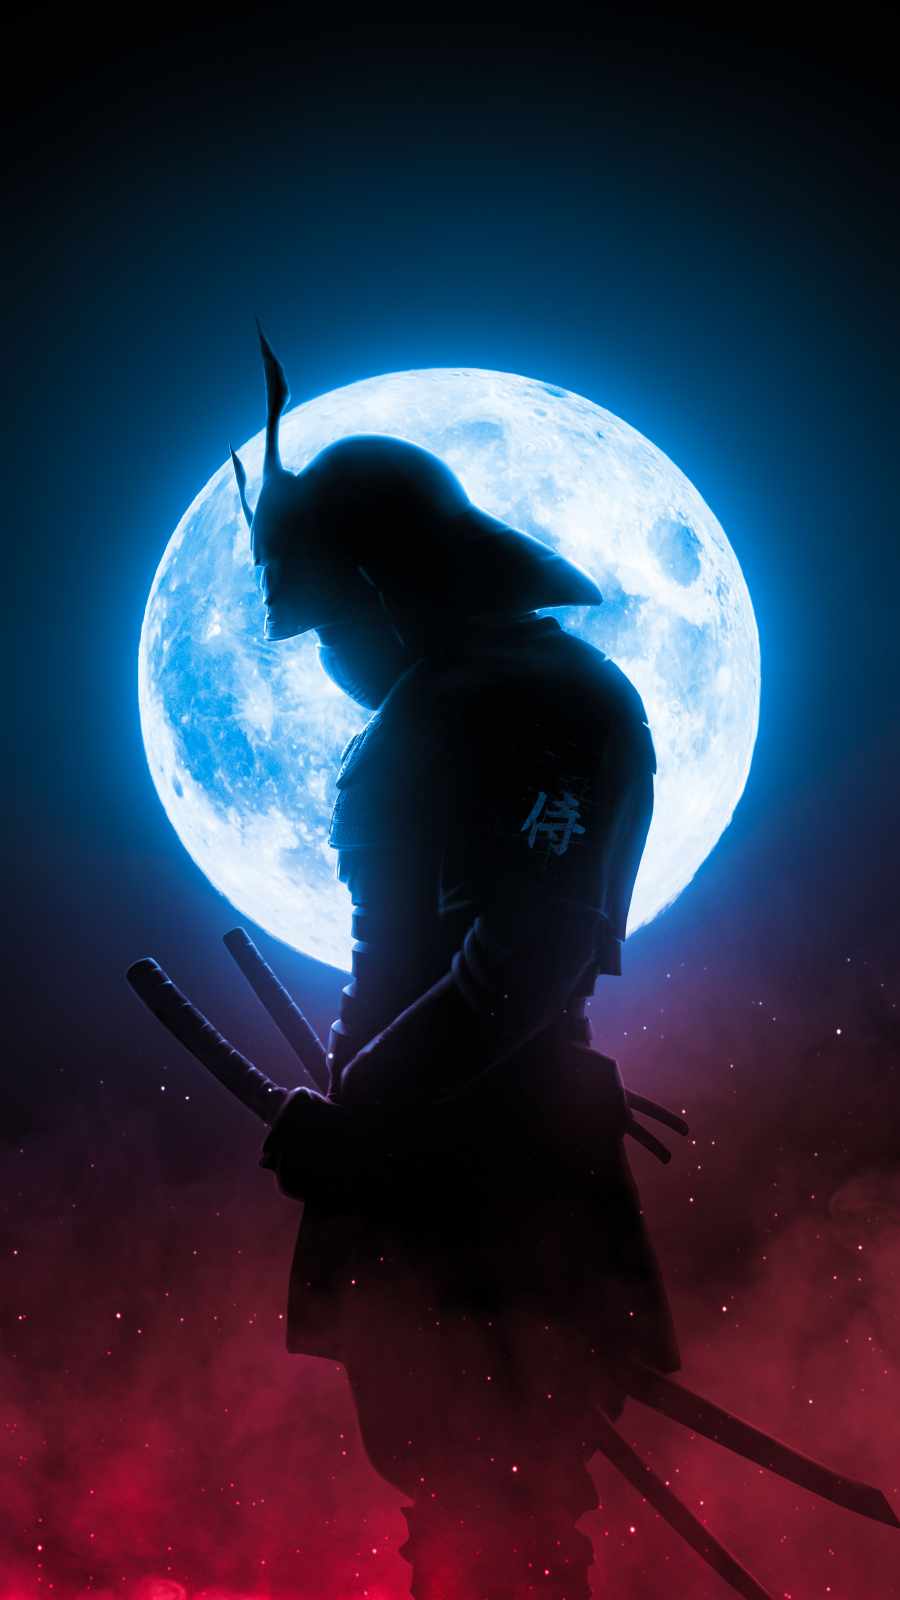 Moon Samurai IPhone Wallpaper Wallpaper, iPhone Wallpaper